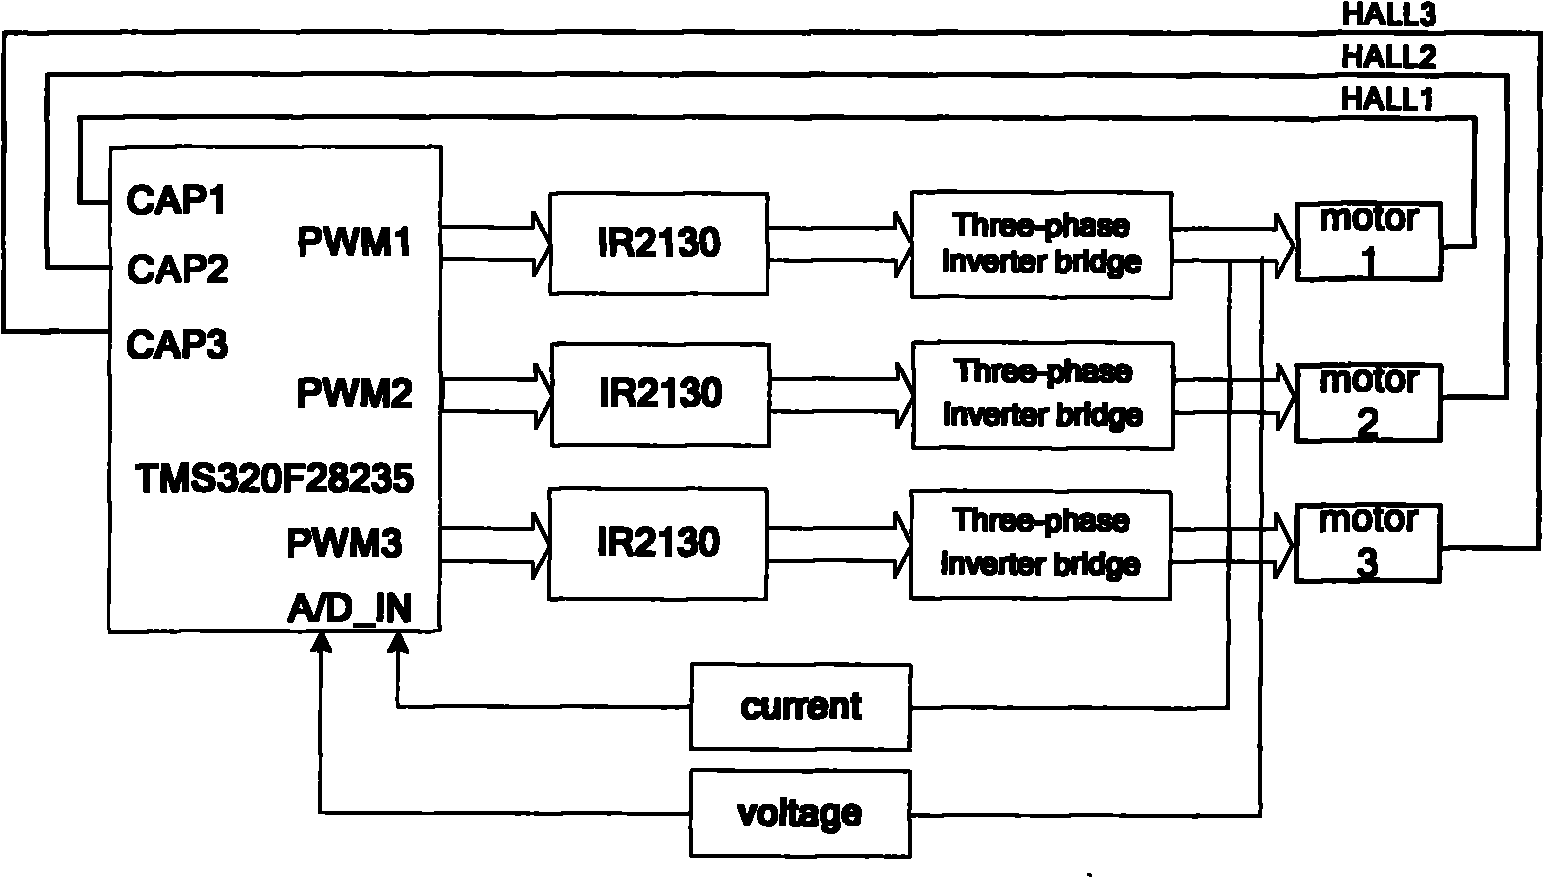 Control system of redundant high voltage permanent magnet brushless direct current motor